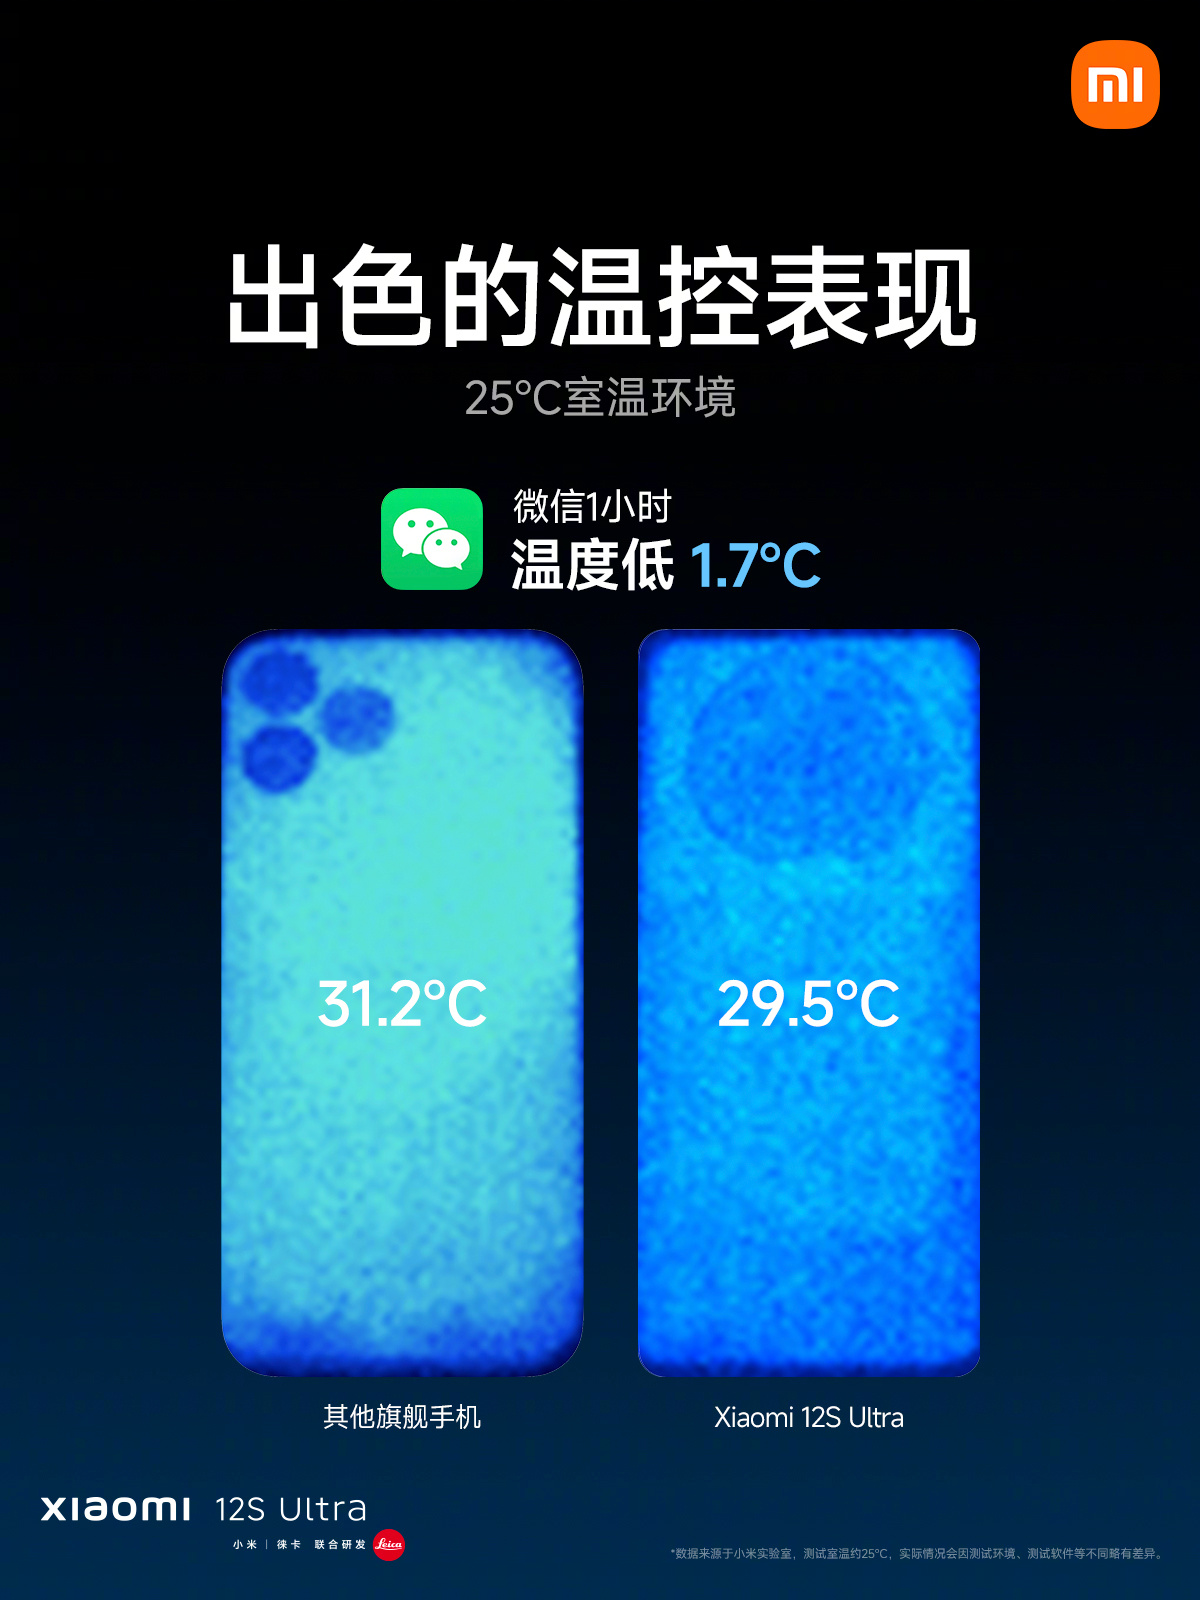 Xiaomi 12S Ultra temperature in 25 degrees